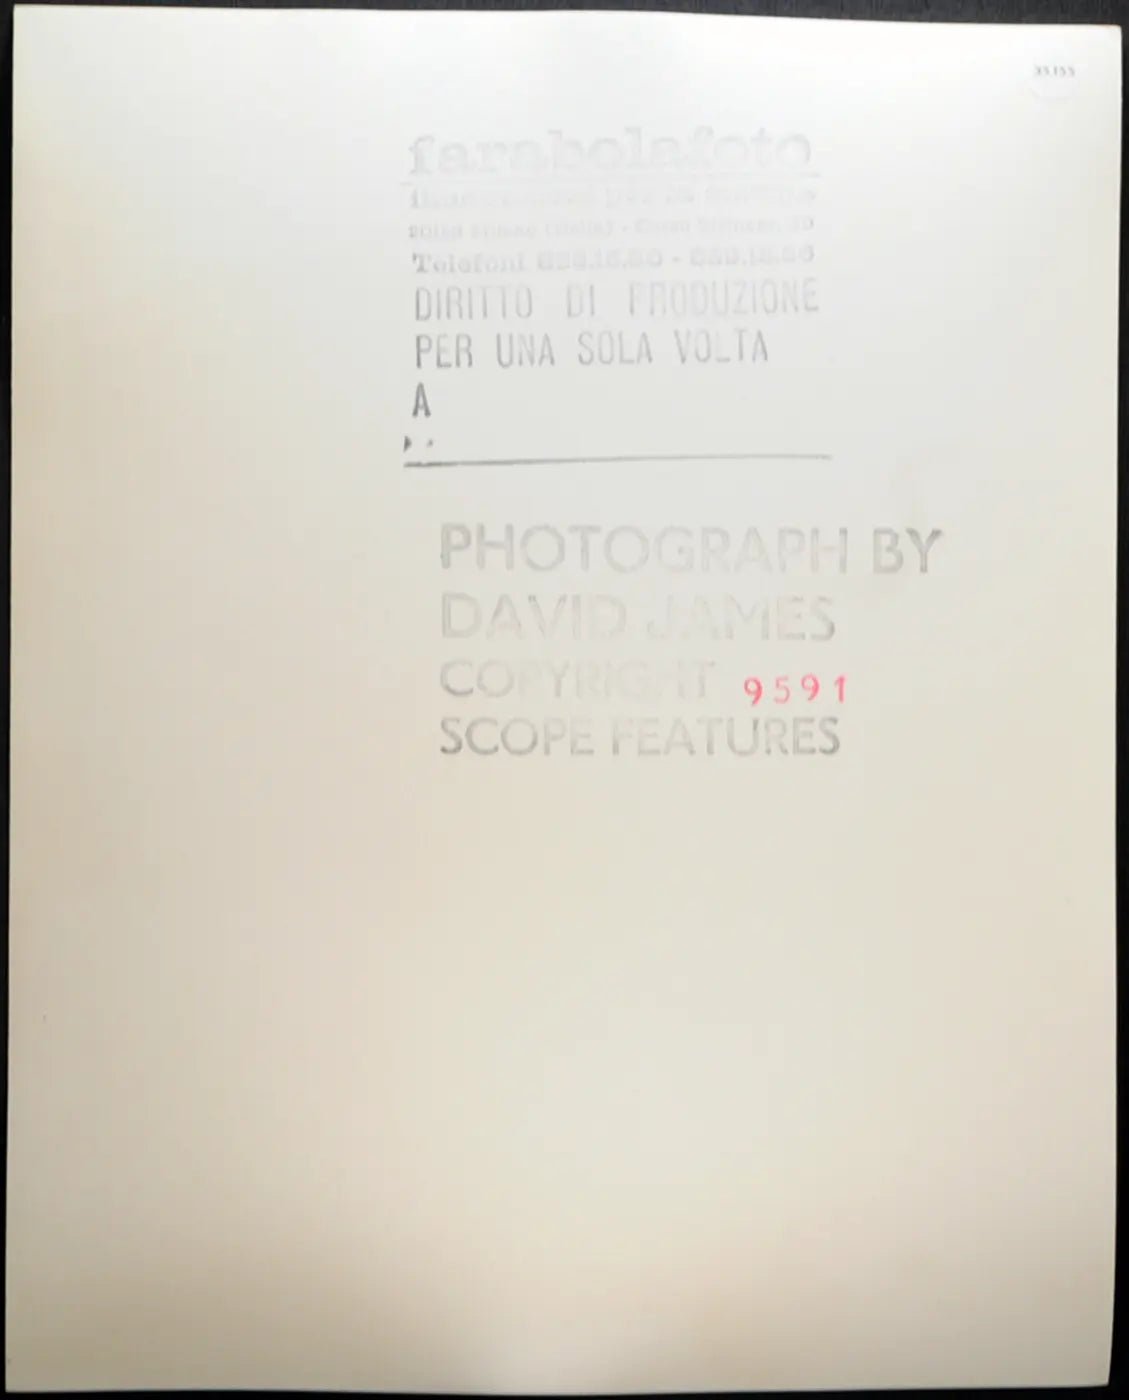 Sally Nicholson anni 70 Ft 35155 - Stampa 20x25 cm - Farabola Stampa ai sali d'argento